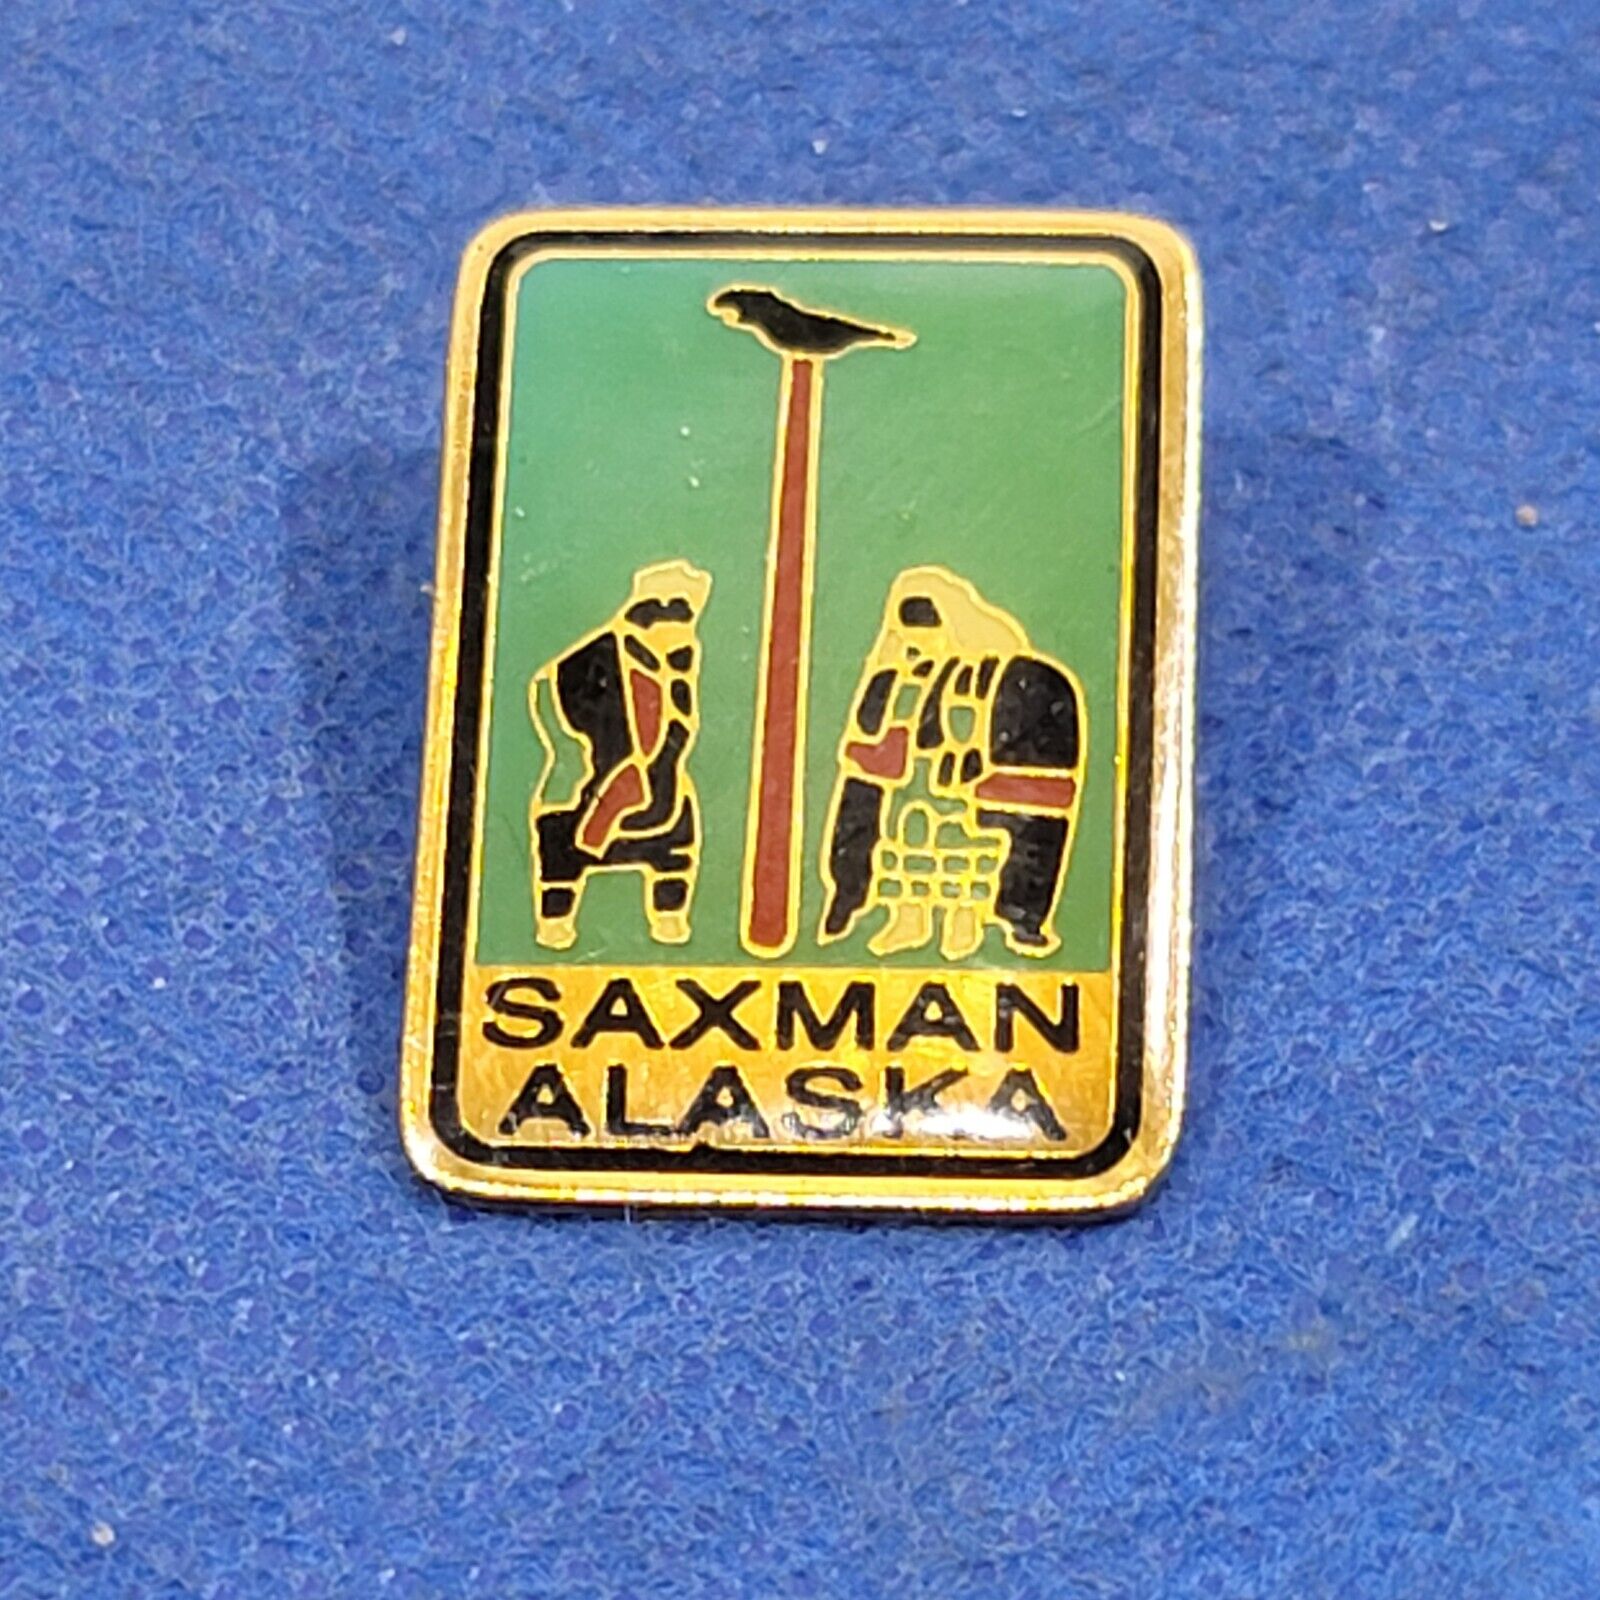 Vintage Hat Pin Saxman Alaska Metal Enamel Lapel pinback